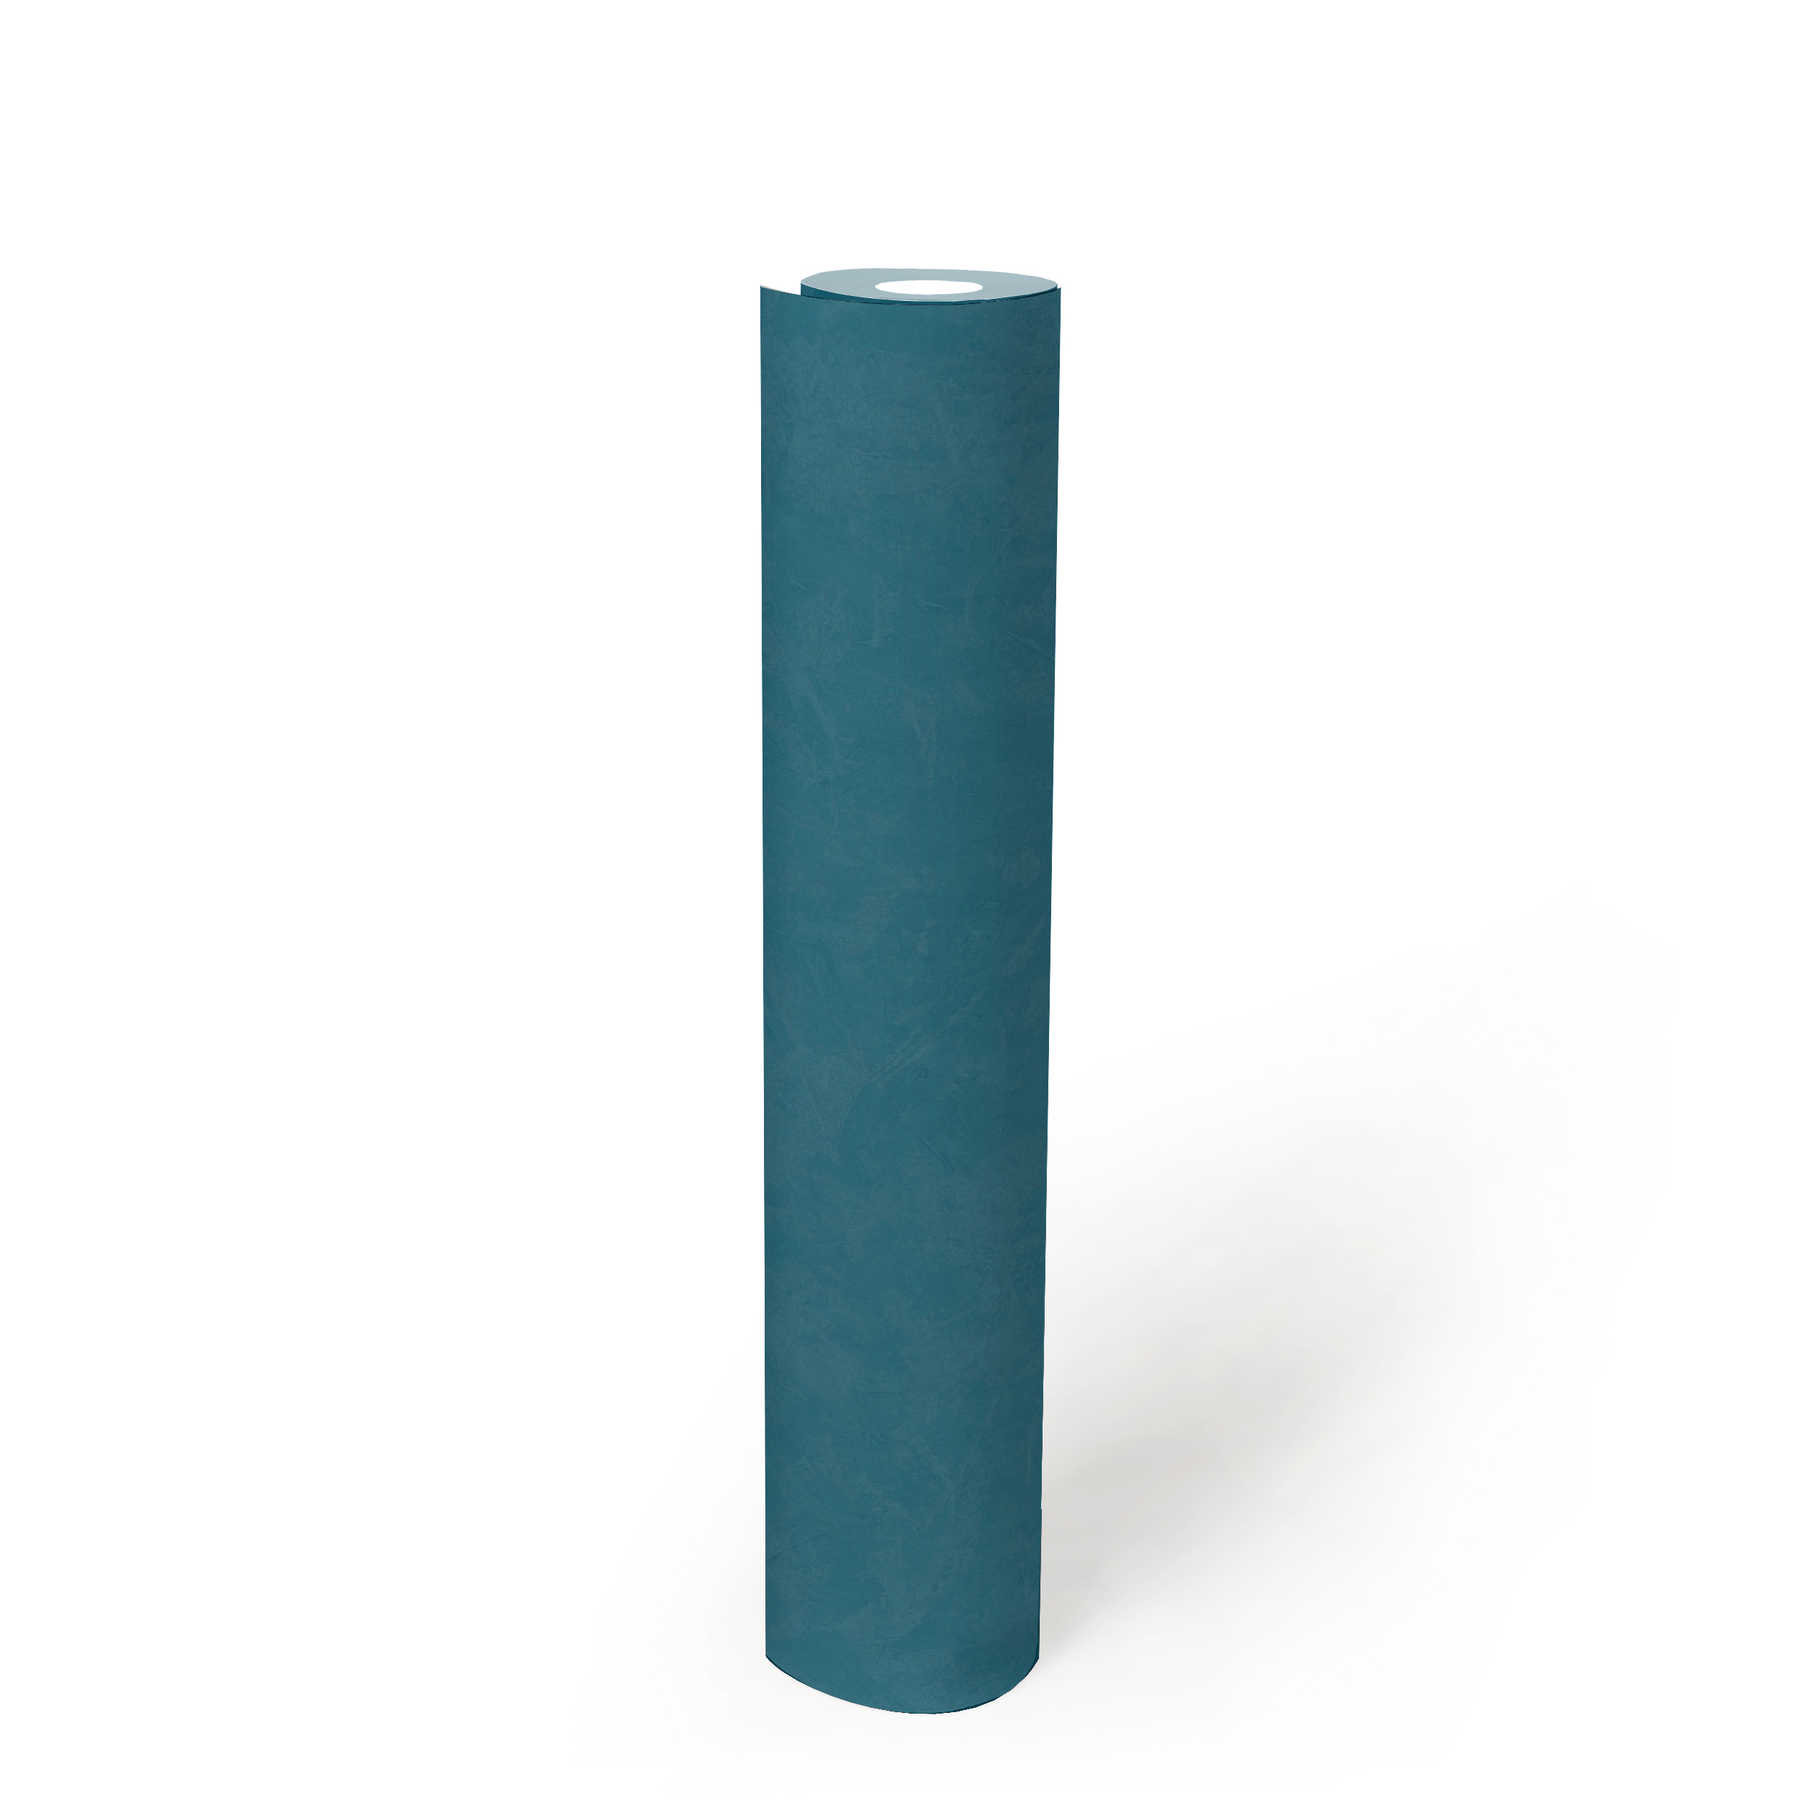             Einfarbige Vliestapete mit Kellenputz-Optik – Blau, Petrol
        